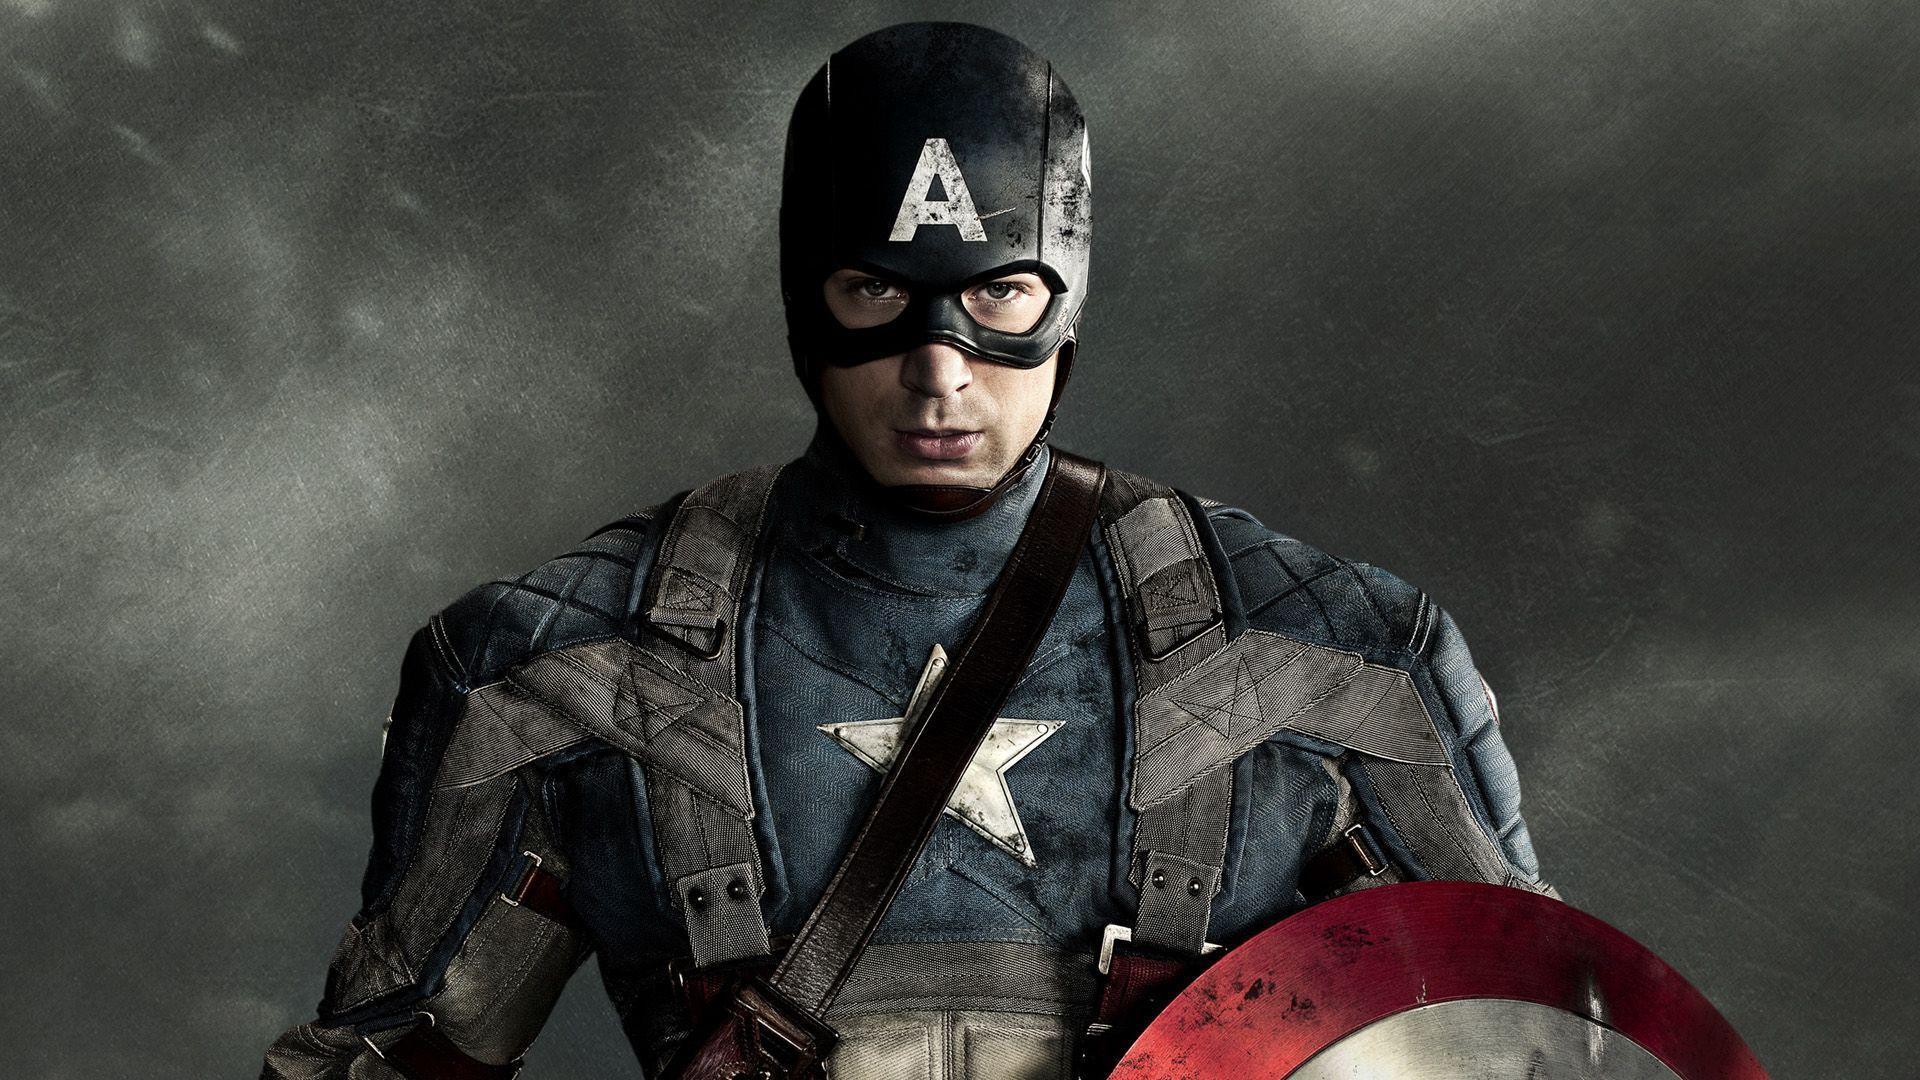 Captain America Winter Soldier Wallpaper Image, Movie Wallpaper